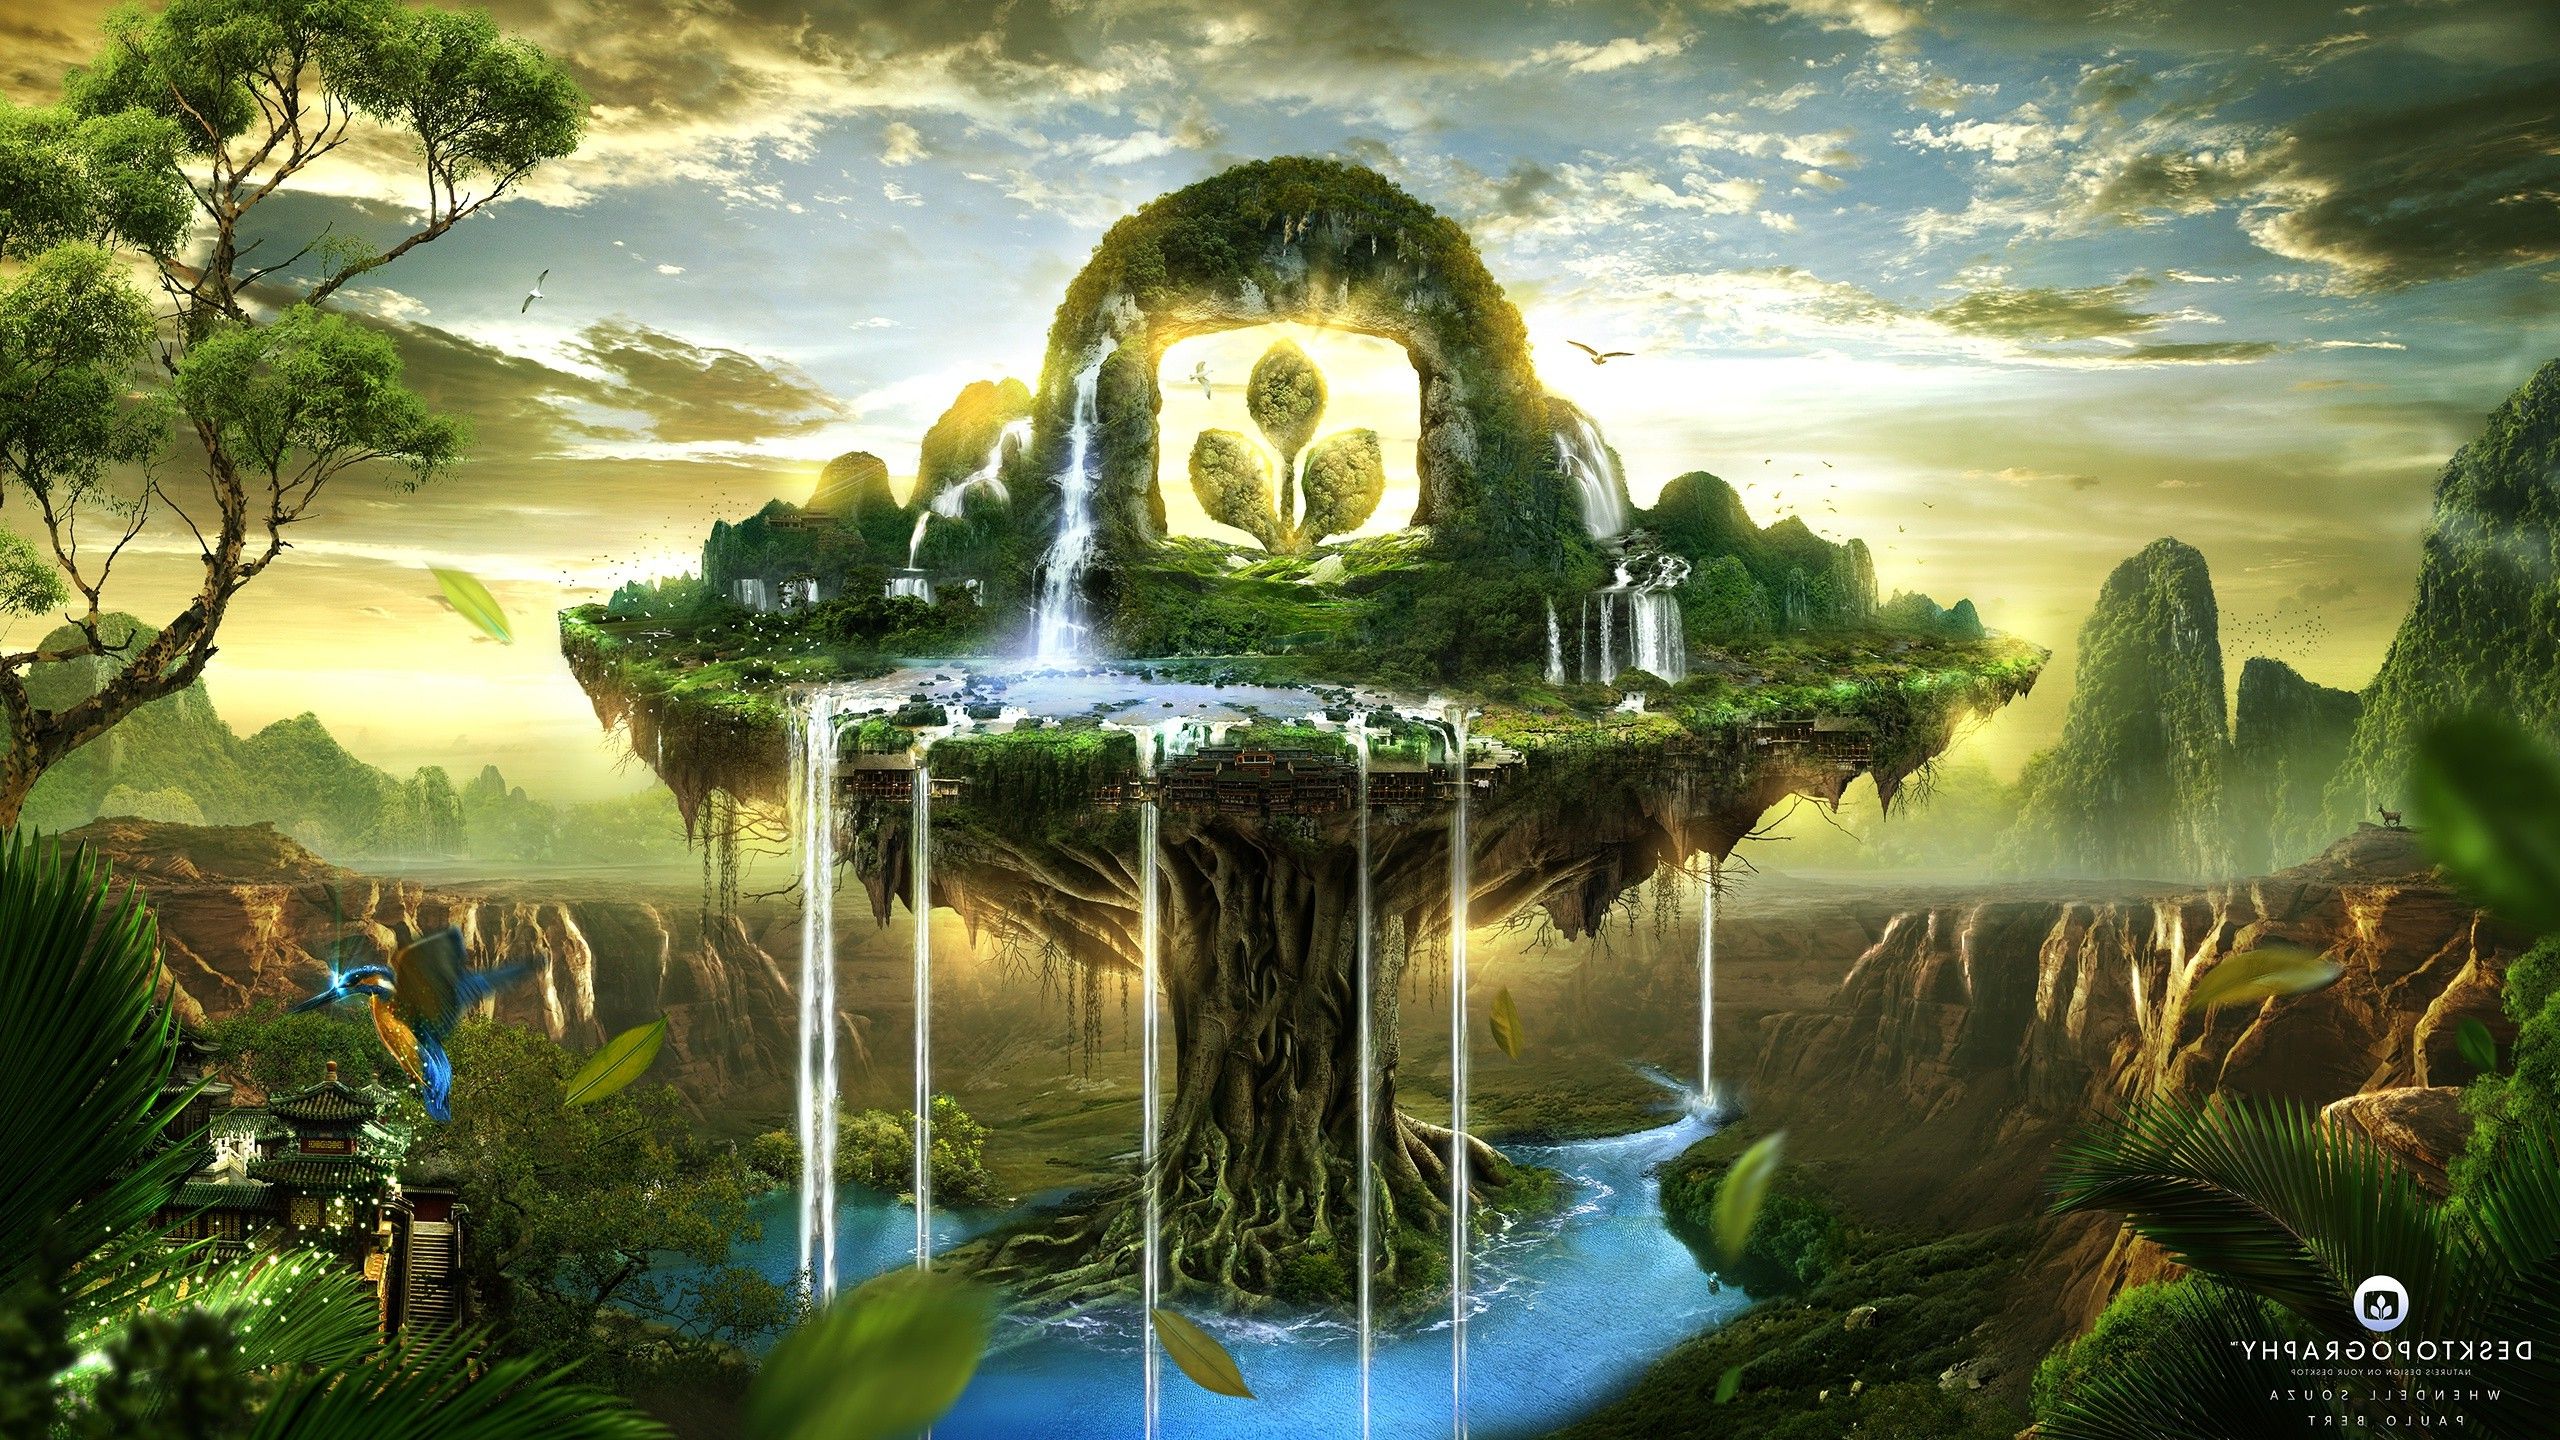 Nature Digital Art Avatar Wallpapers Hd Desktop And Mobile Backgrounds ...